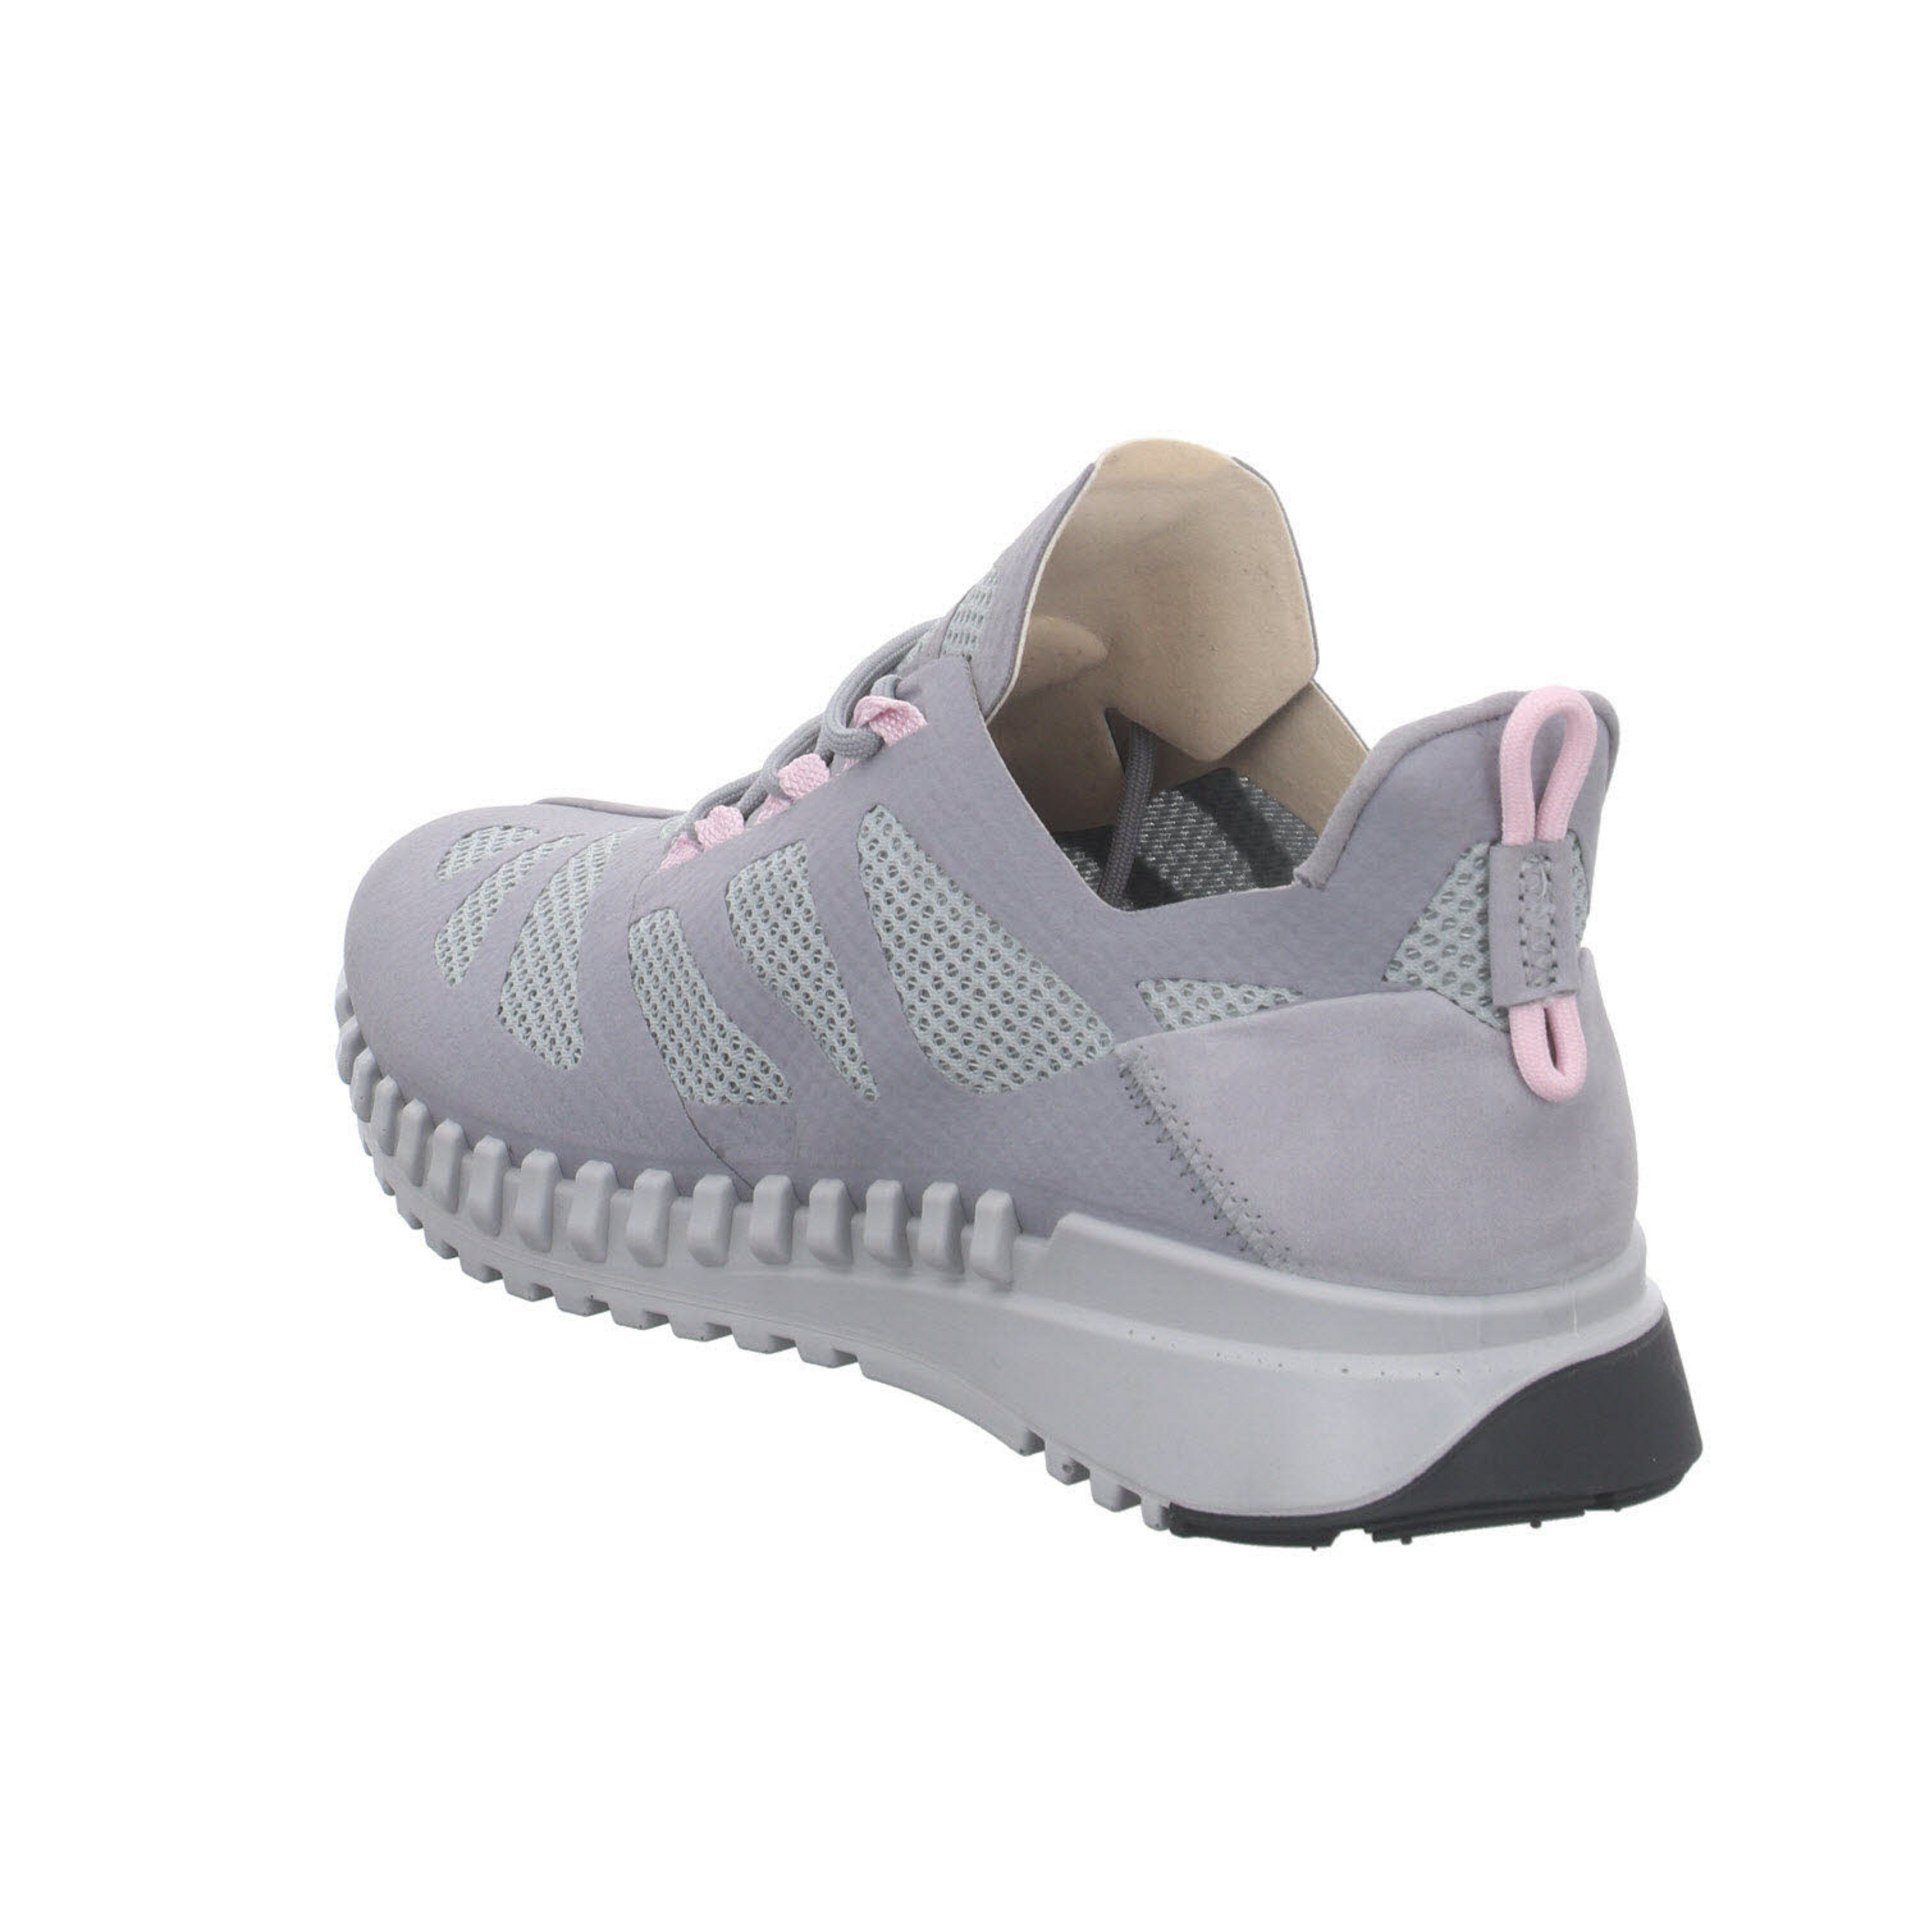 Ecco Damen Sneaker Schuhe Zipflex Sneaker Schnürschuh Leder-/Textilkombination silvergrey/silvergre